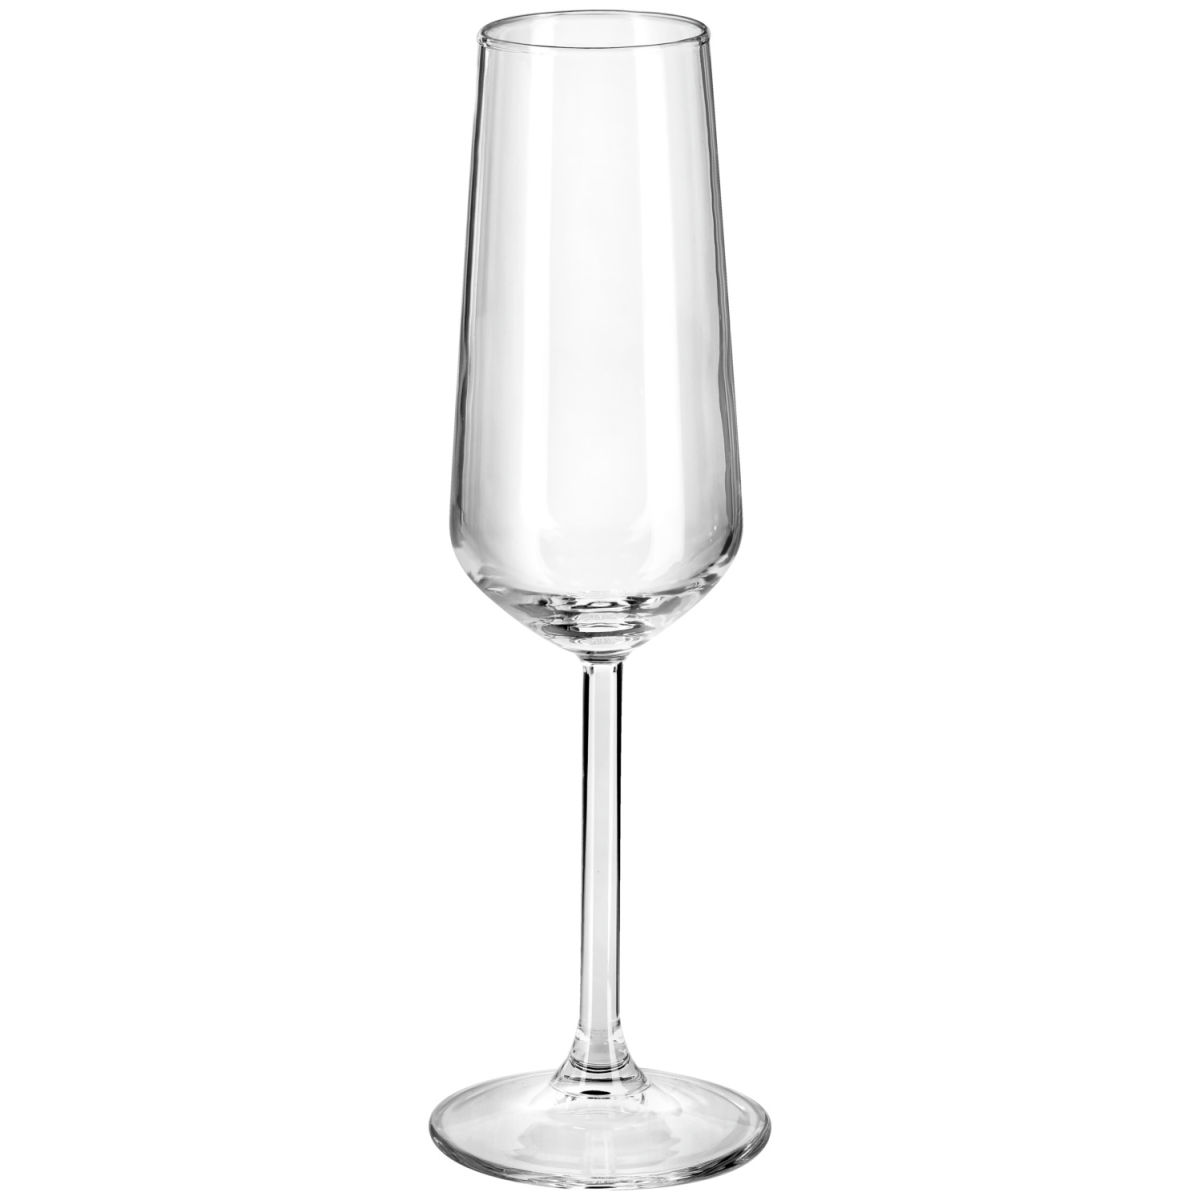 Pasabahçe Champagneglas Allegra; 195ml, 4.5x22.6 cm (ØxH); transparant; 6 stuk / verpakking